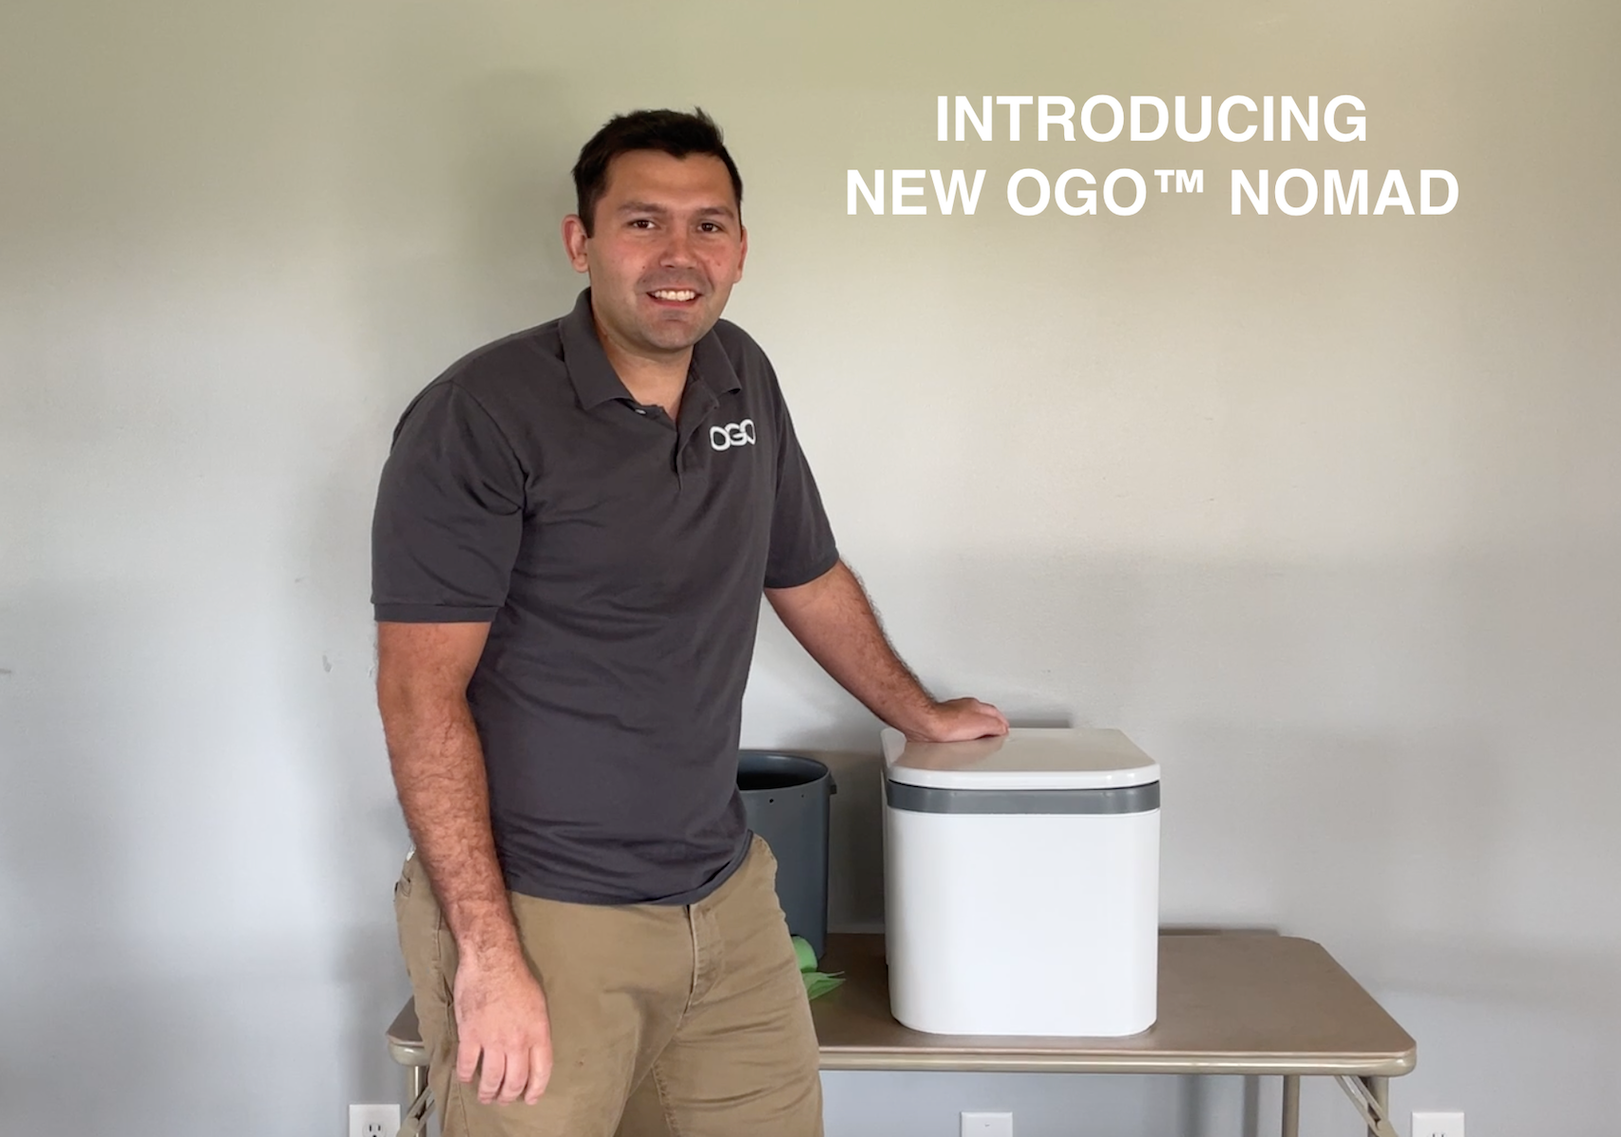 Load video: Introducing OGO Nomad